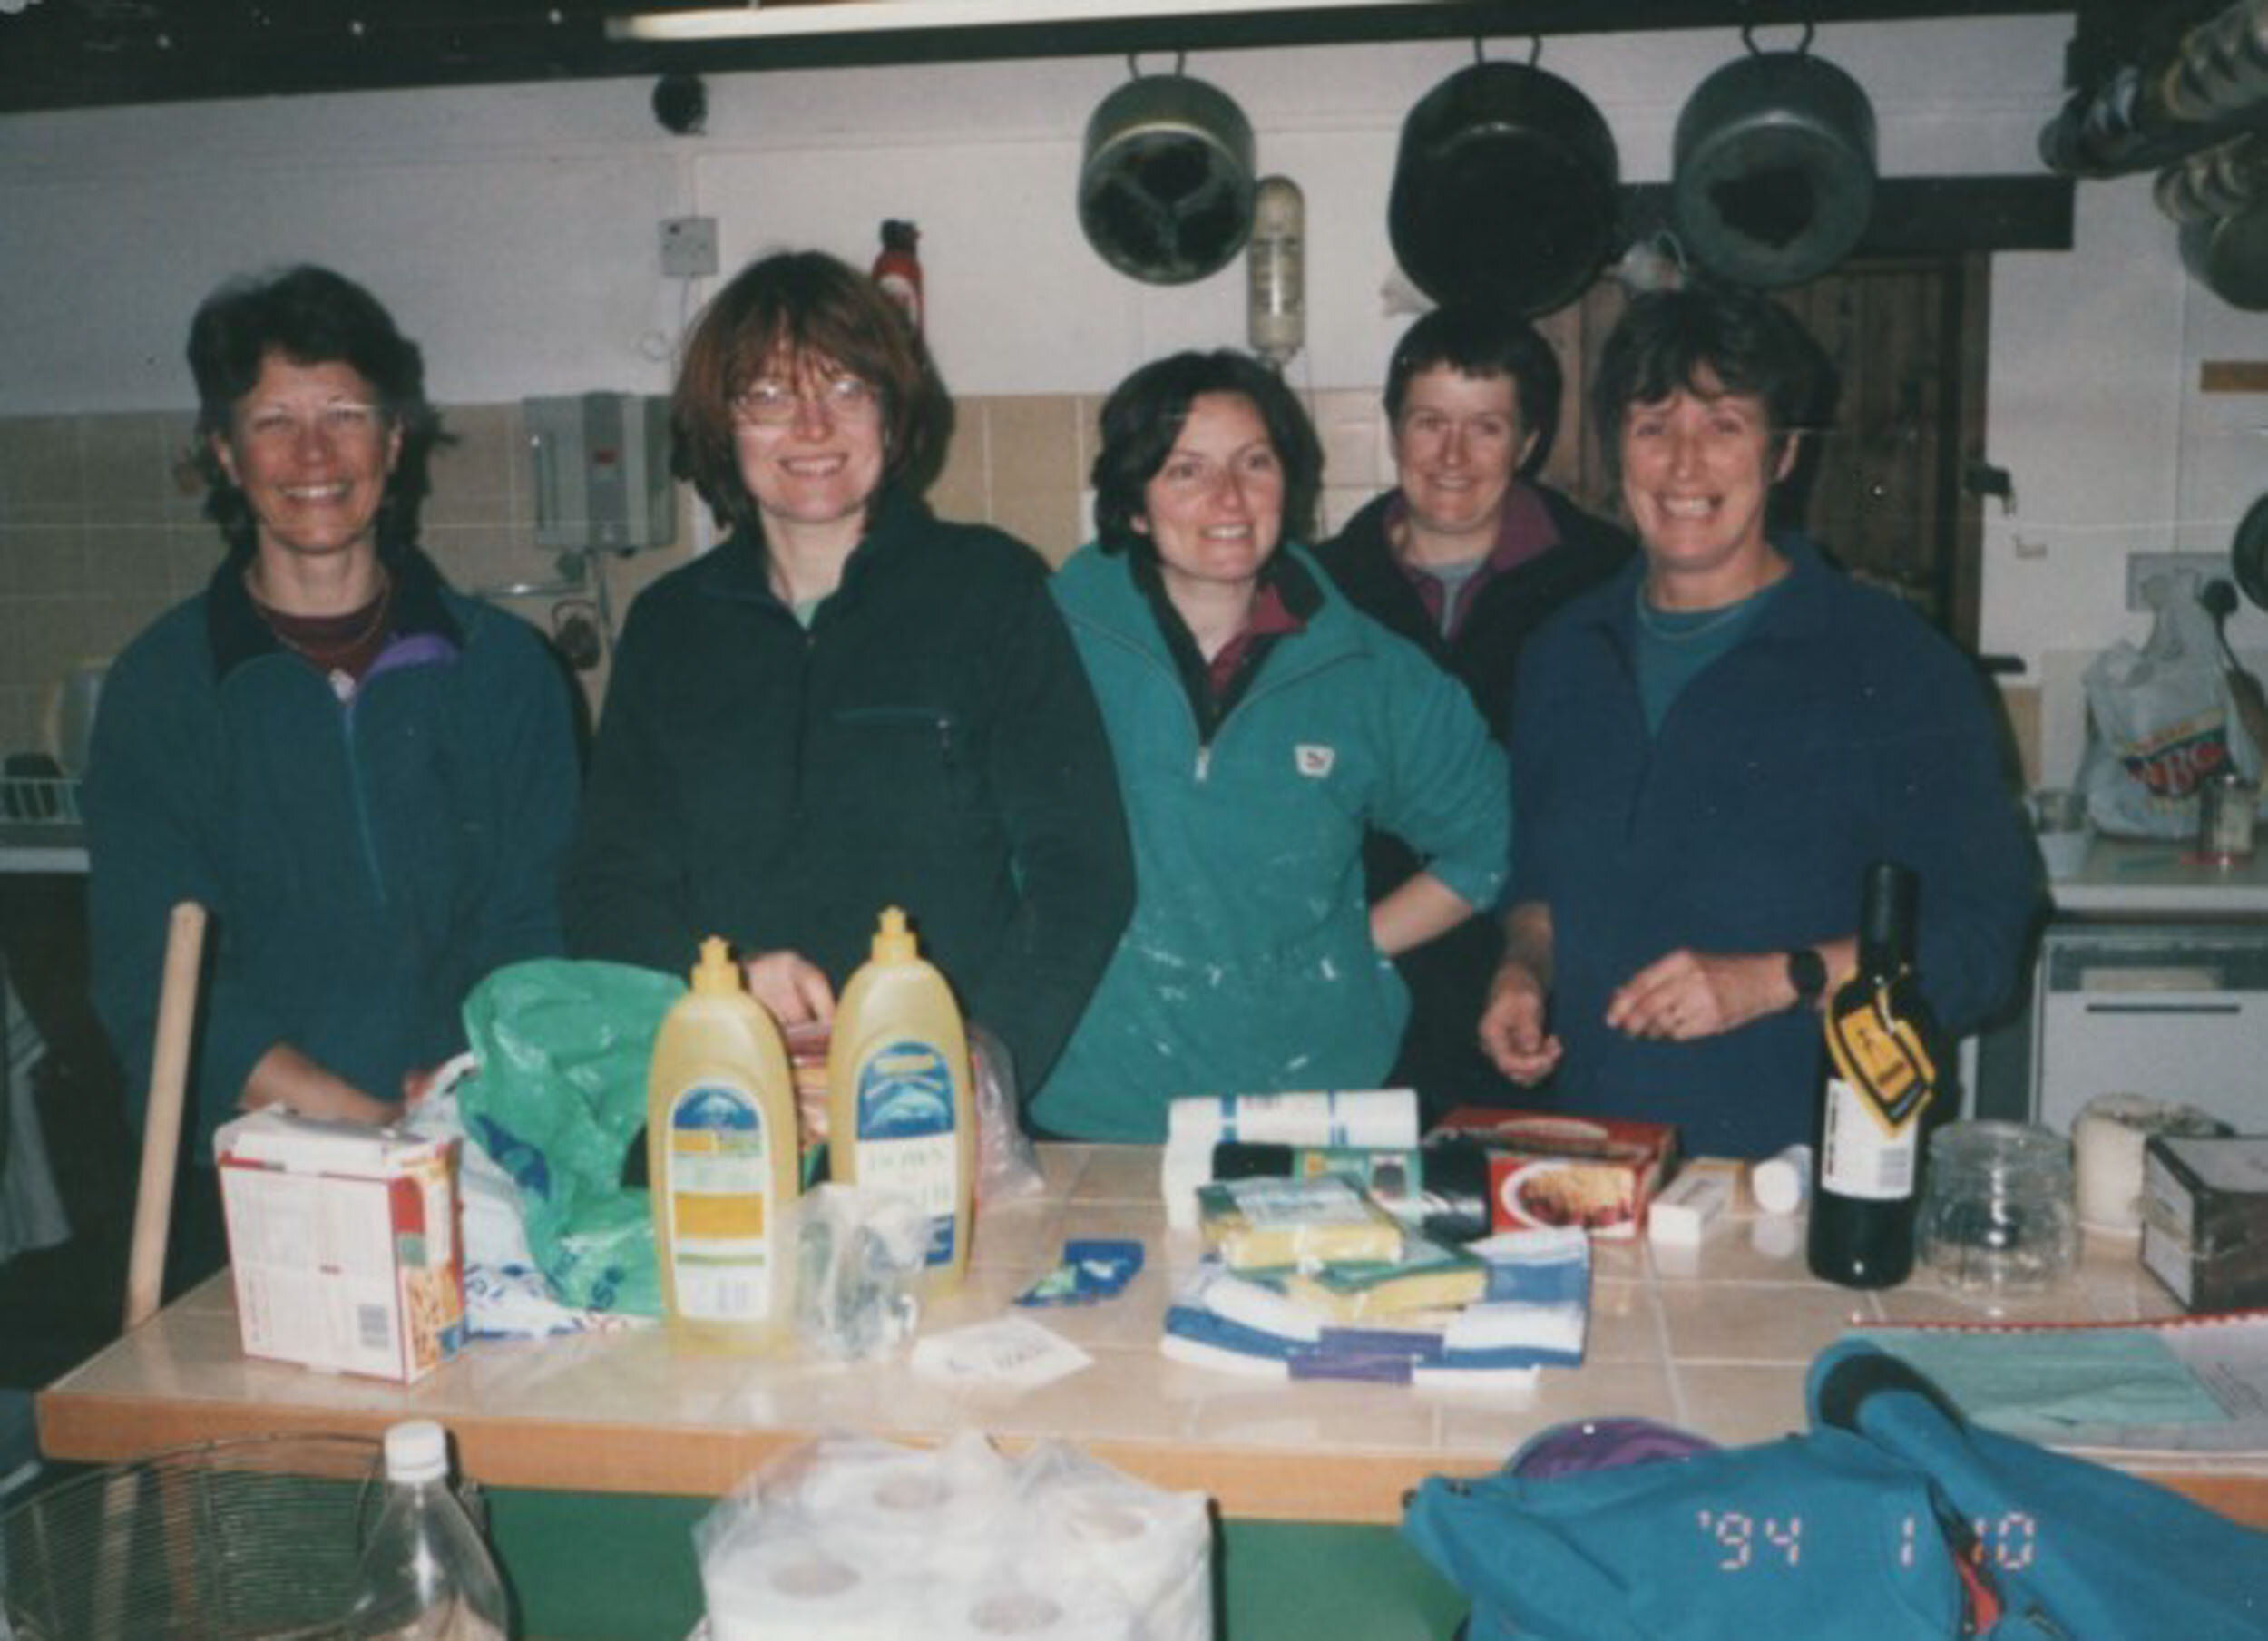 Alison Cairns, Lousie Pellett, Rachel Nicholson Barker, Sally Keir in 2000